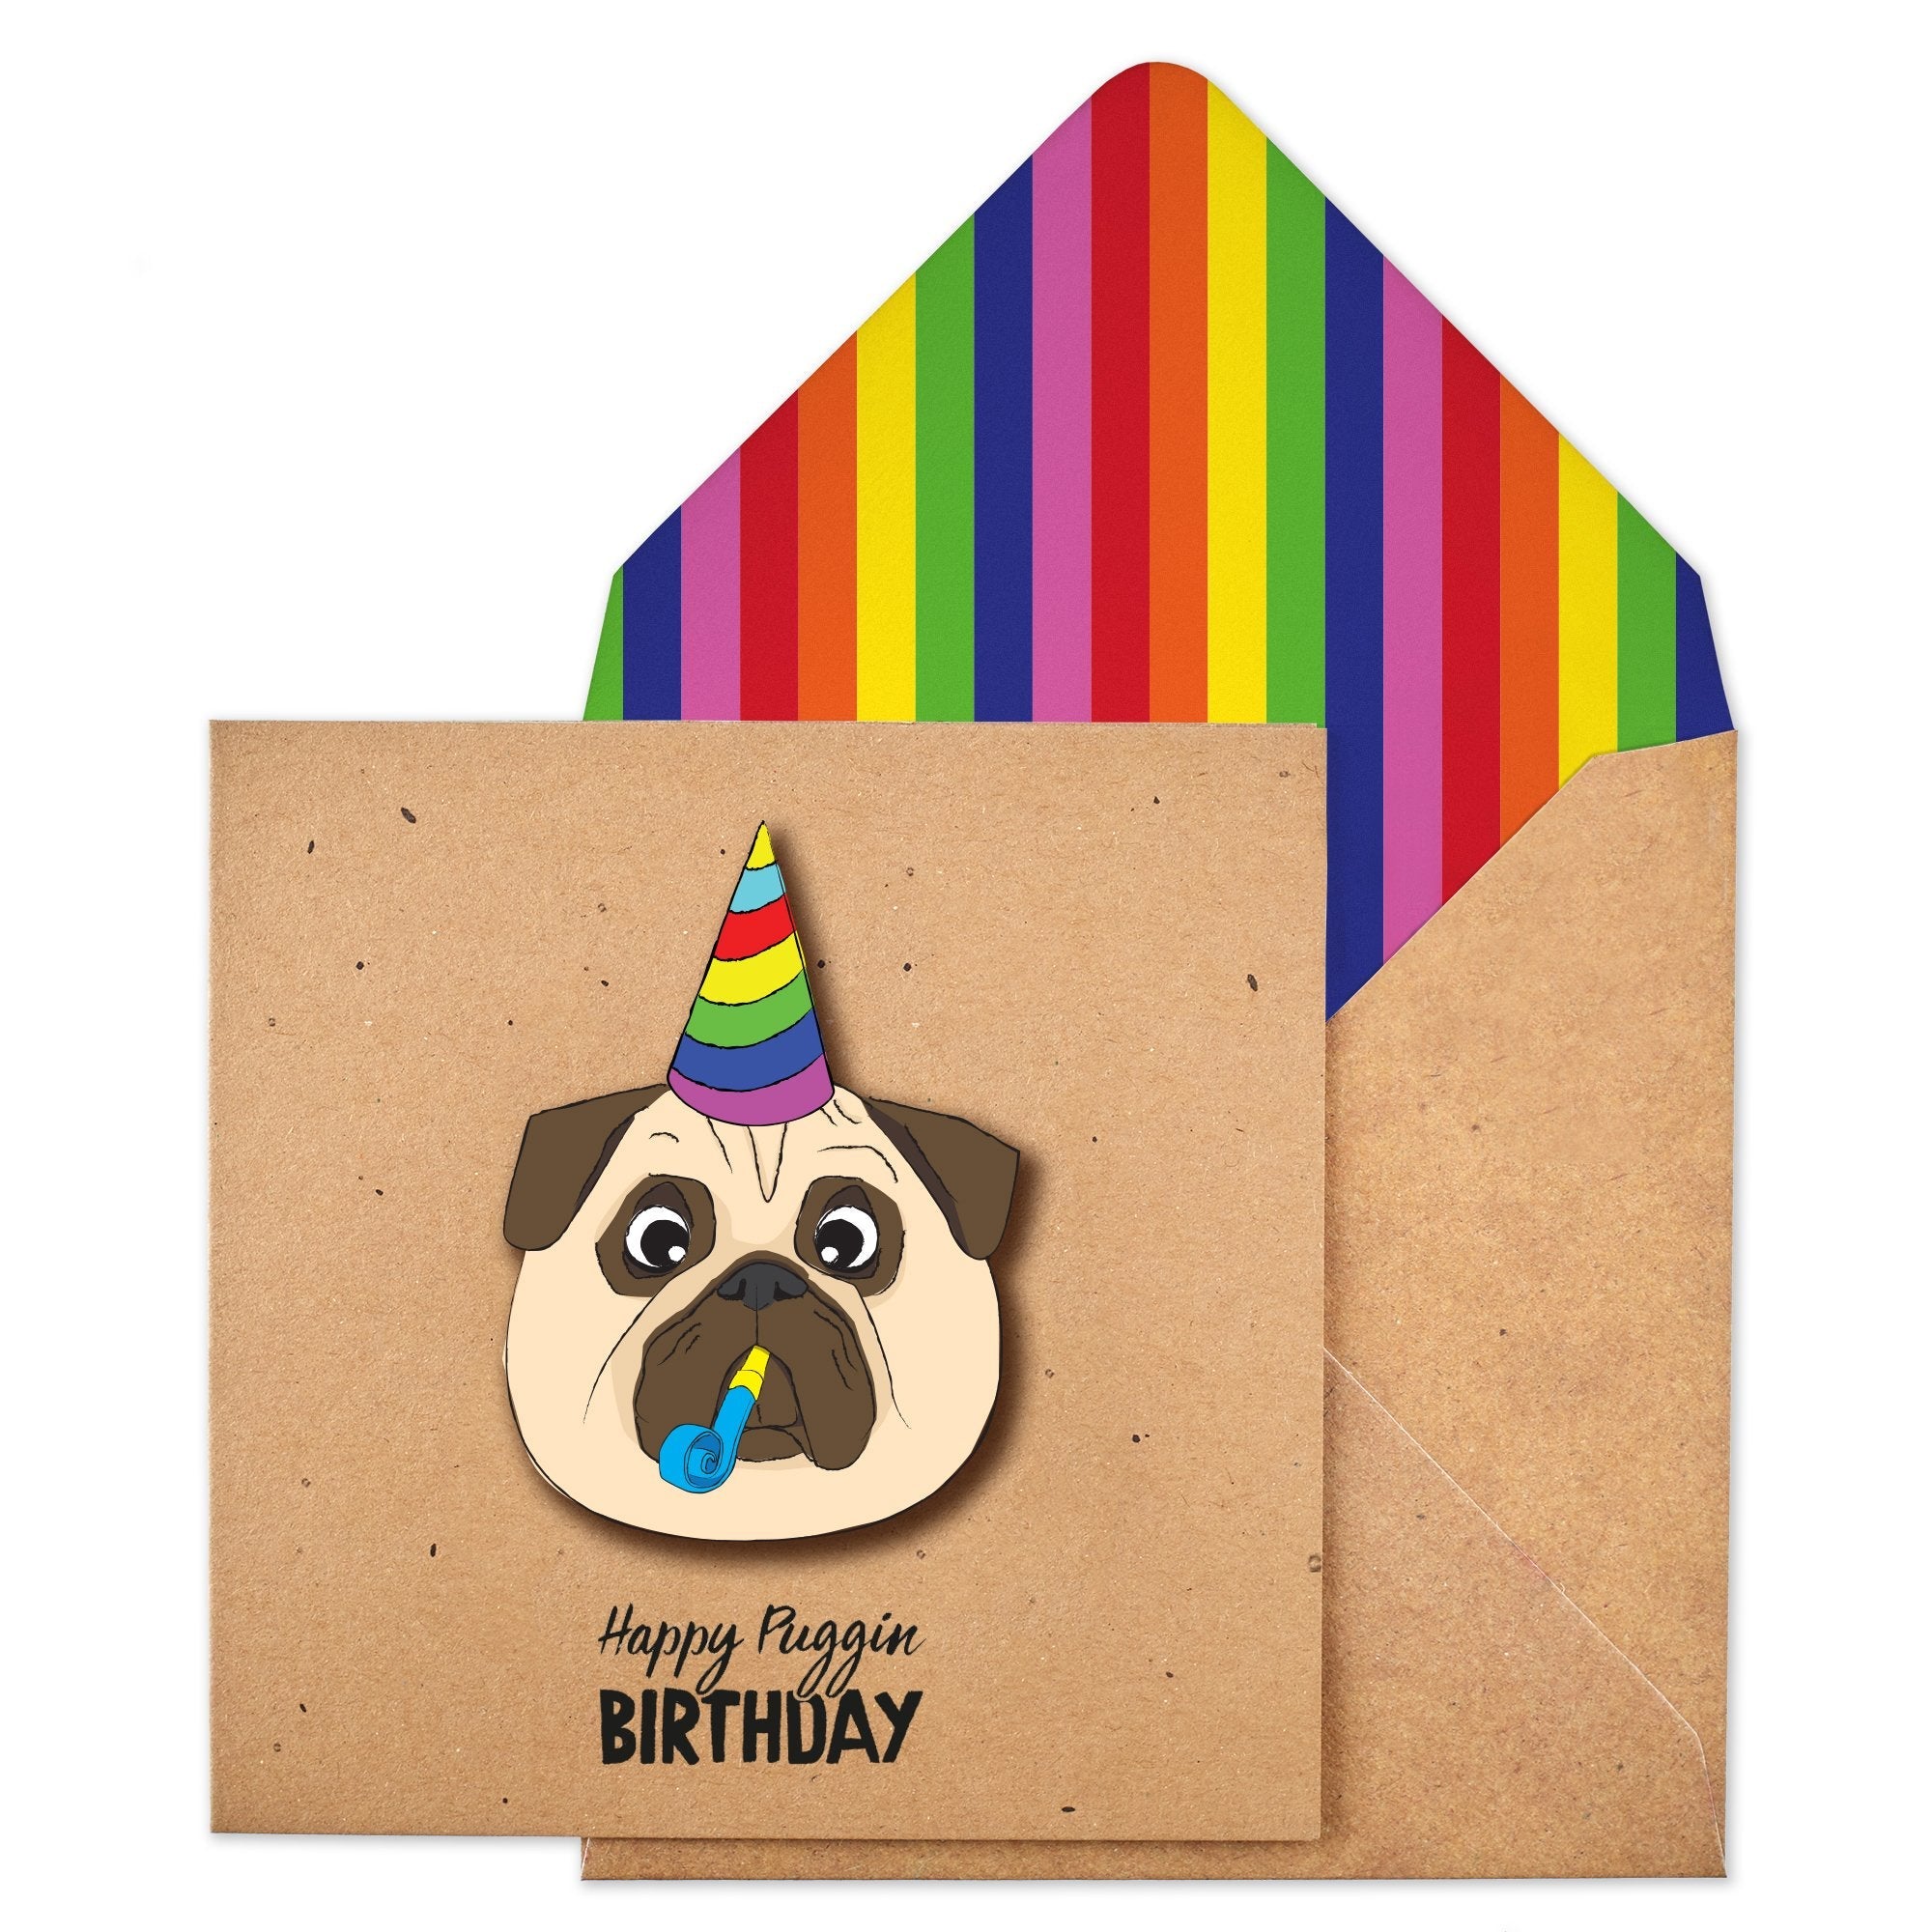 Have a Puggin Birthday'